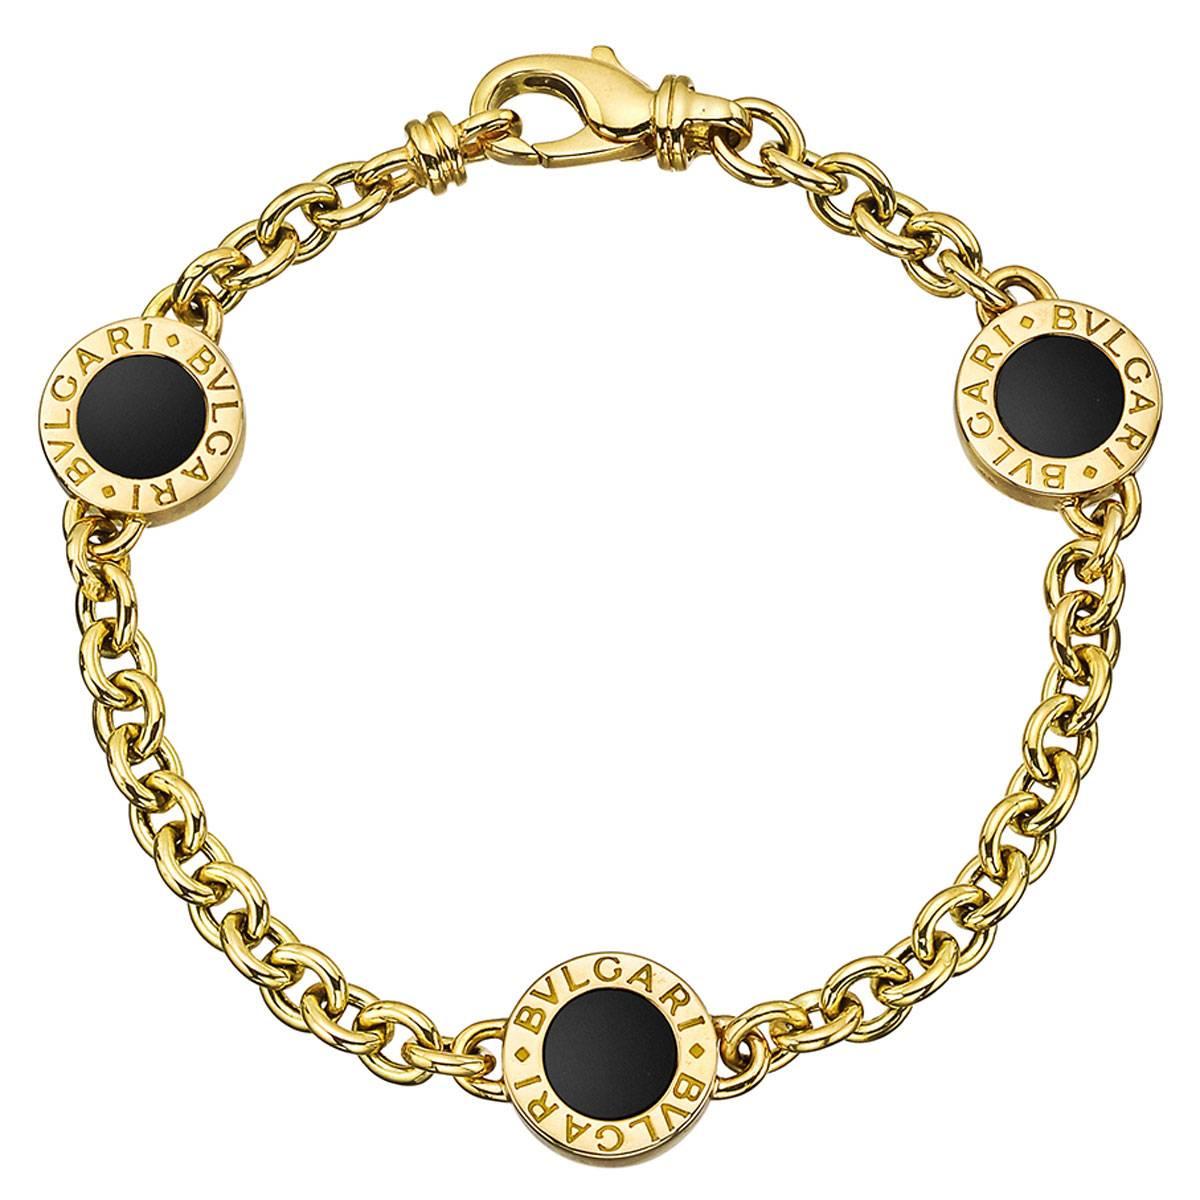 Bulgari Black Onyx Gold Station Bracelet